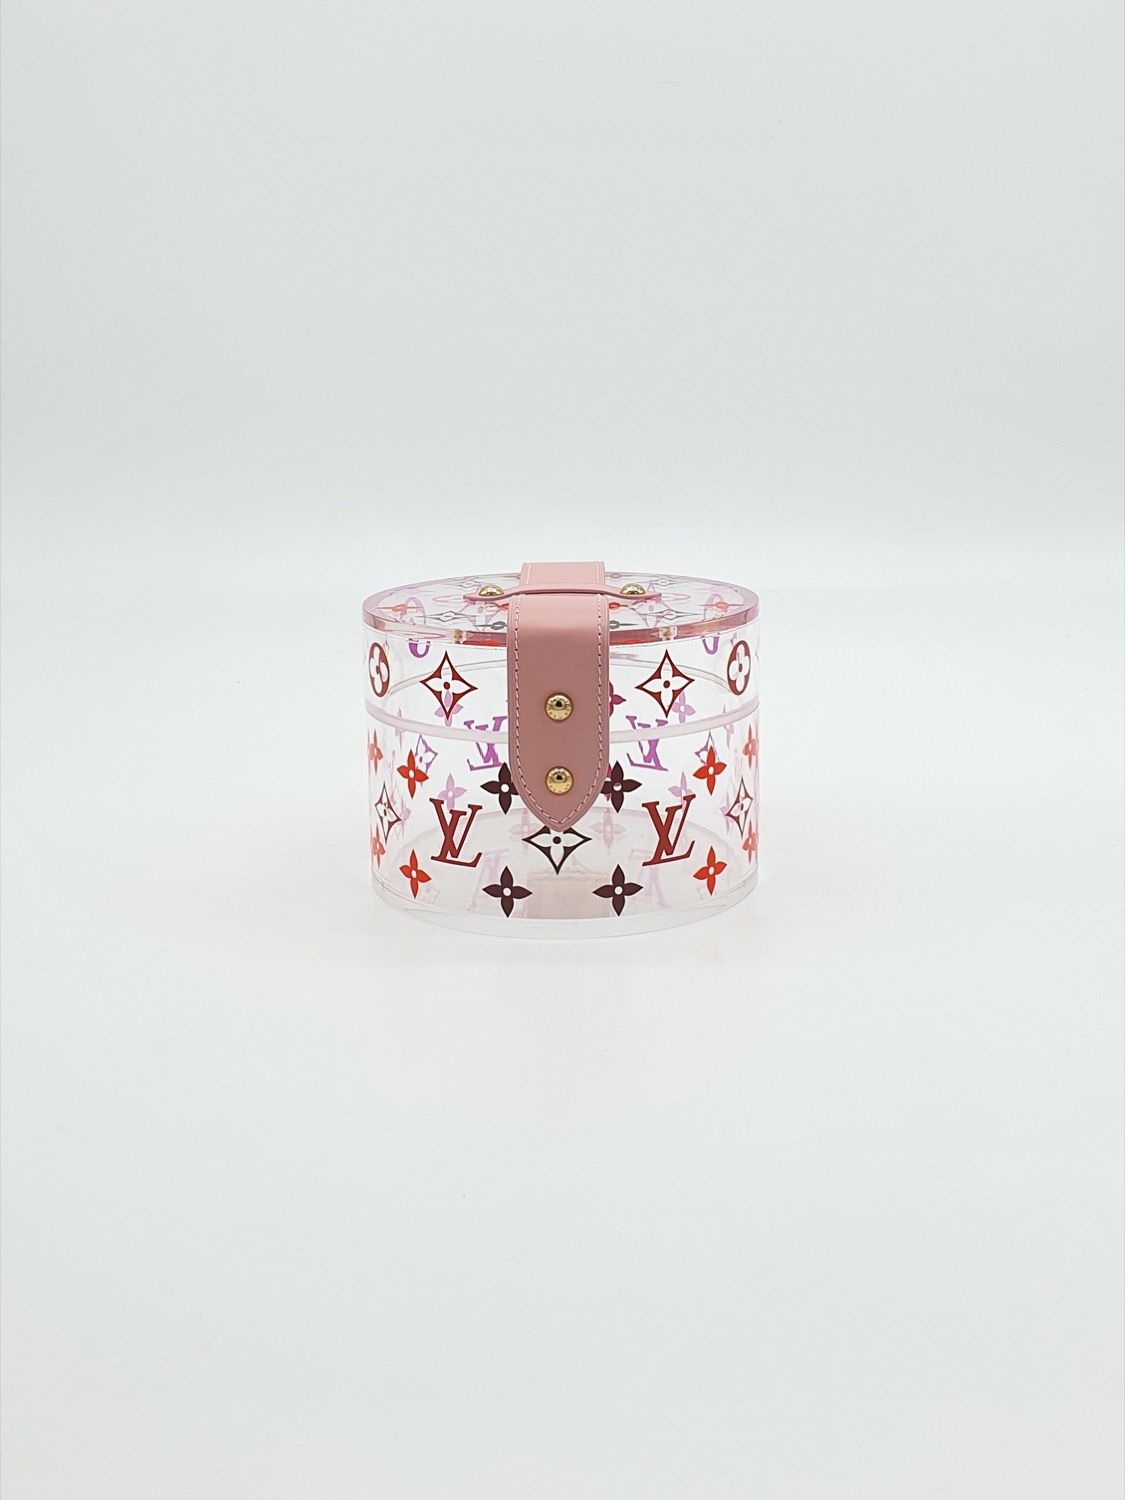 Louis Vuitton Scott Box with Pink & Red Motifs